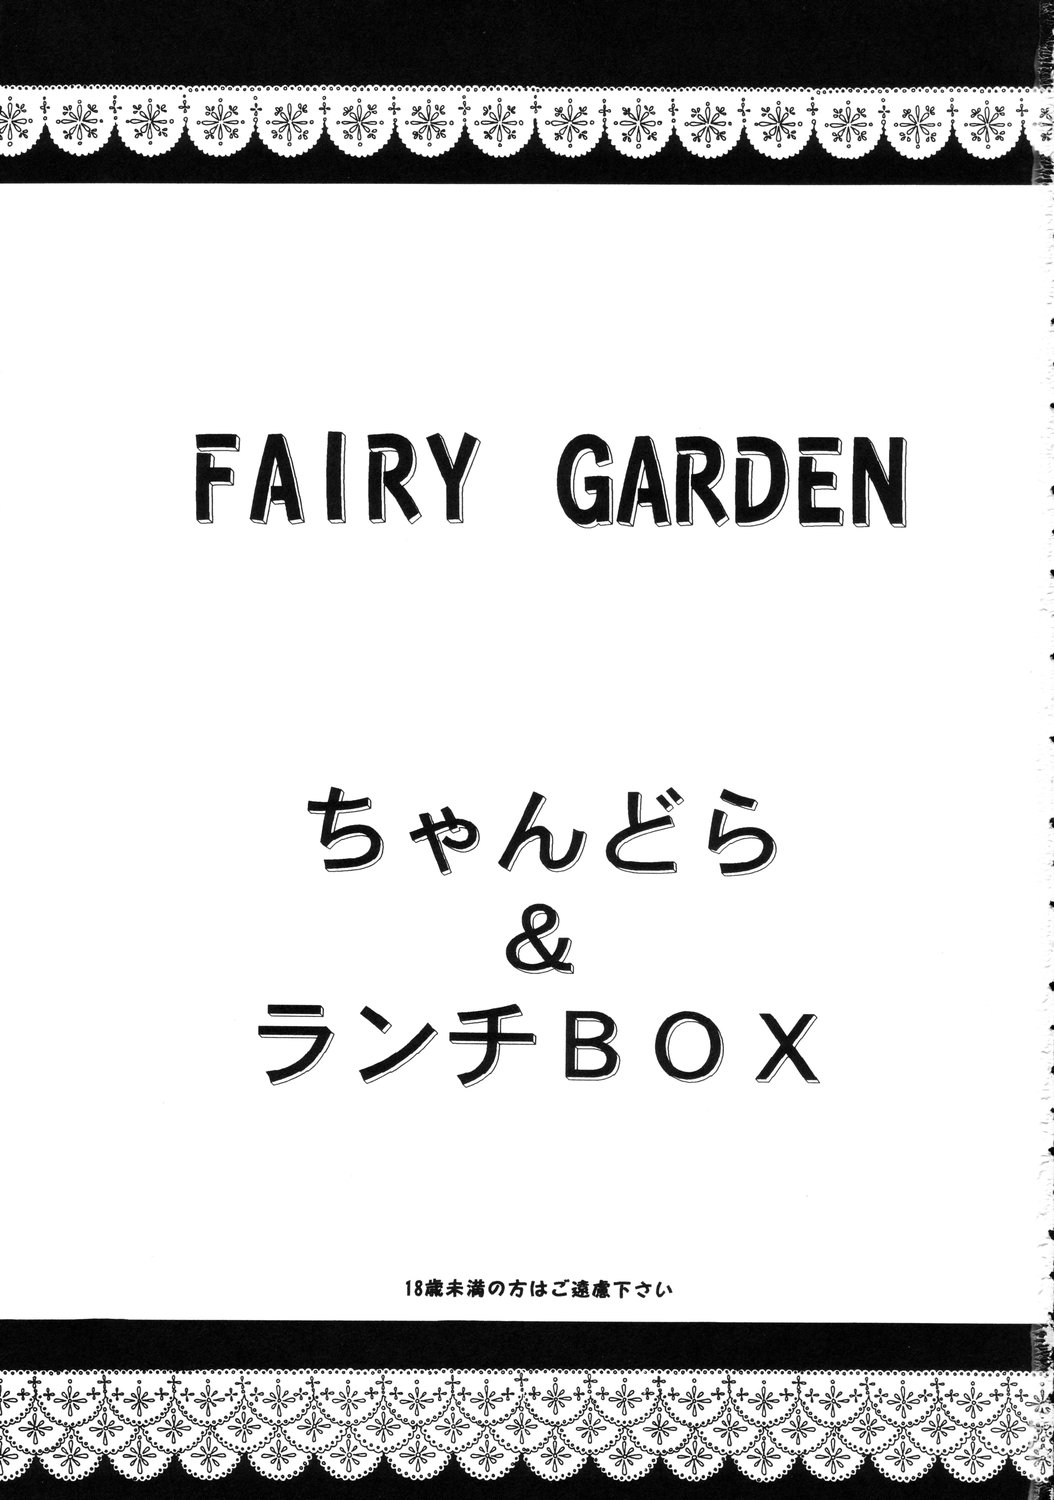 [Chobits] Lunch Box 51 - Fairy Garden (Lunch Box) 